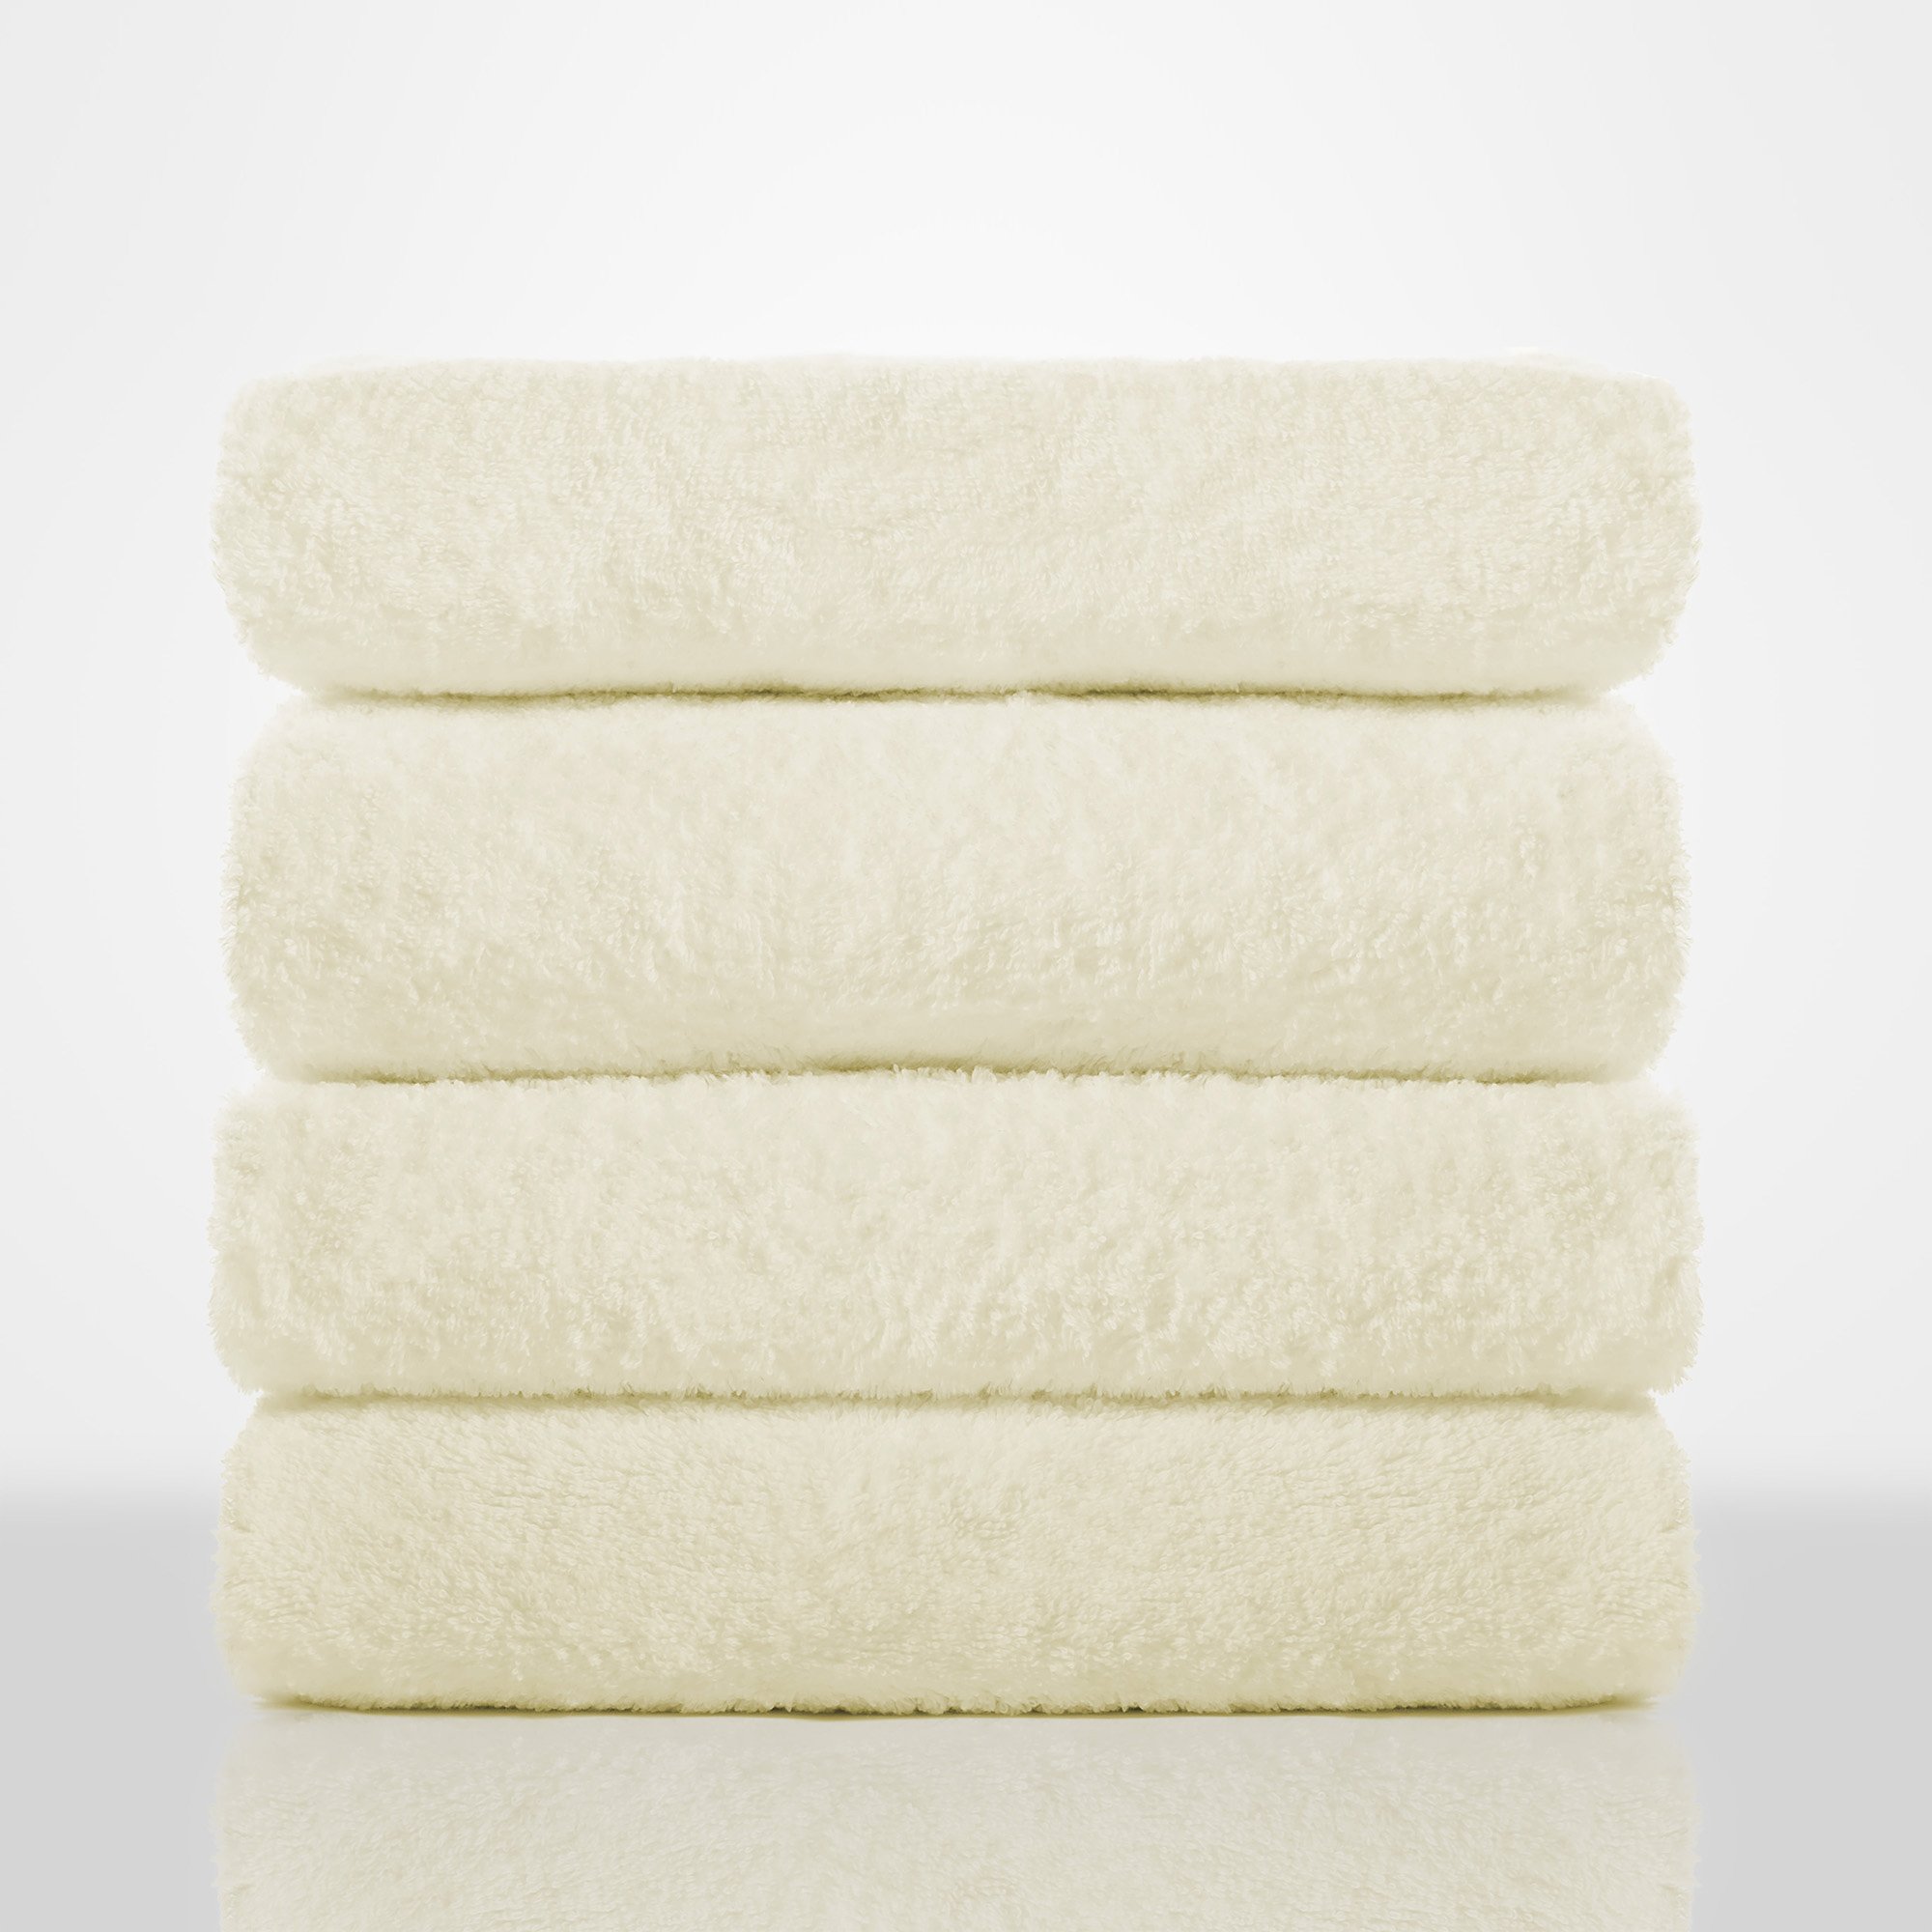 35"x 60" - 100% Turkish Cotton Ivory Terry Bath Towel-Robemart.com